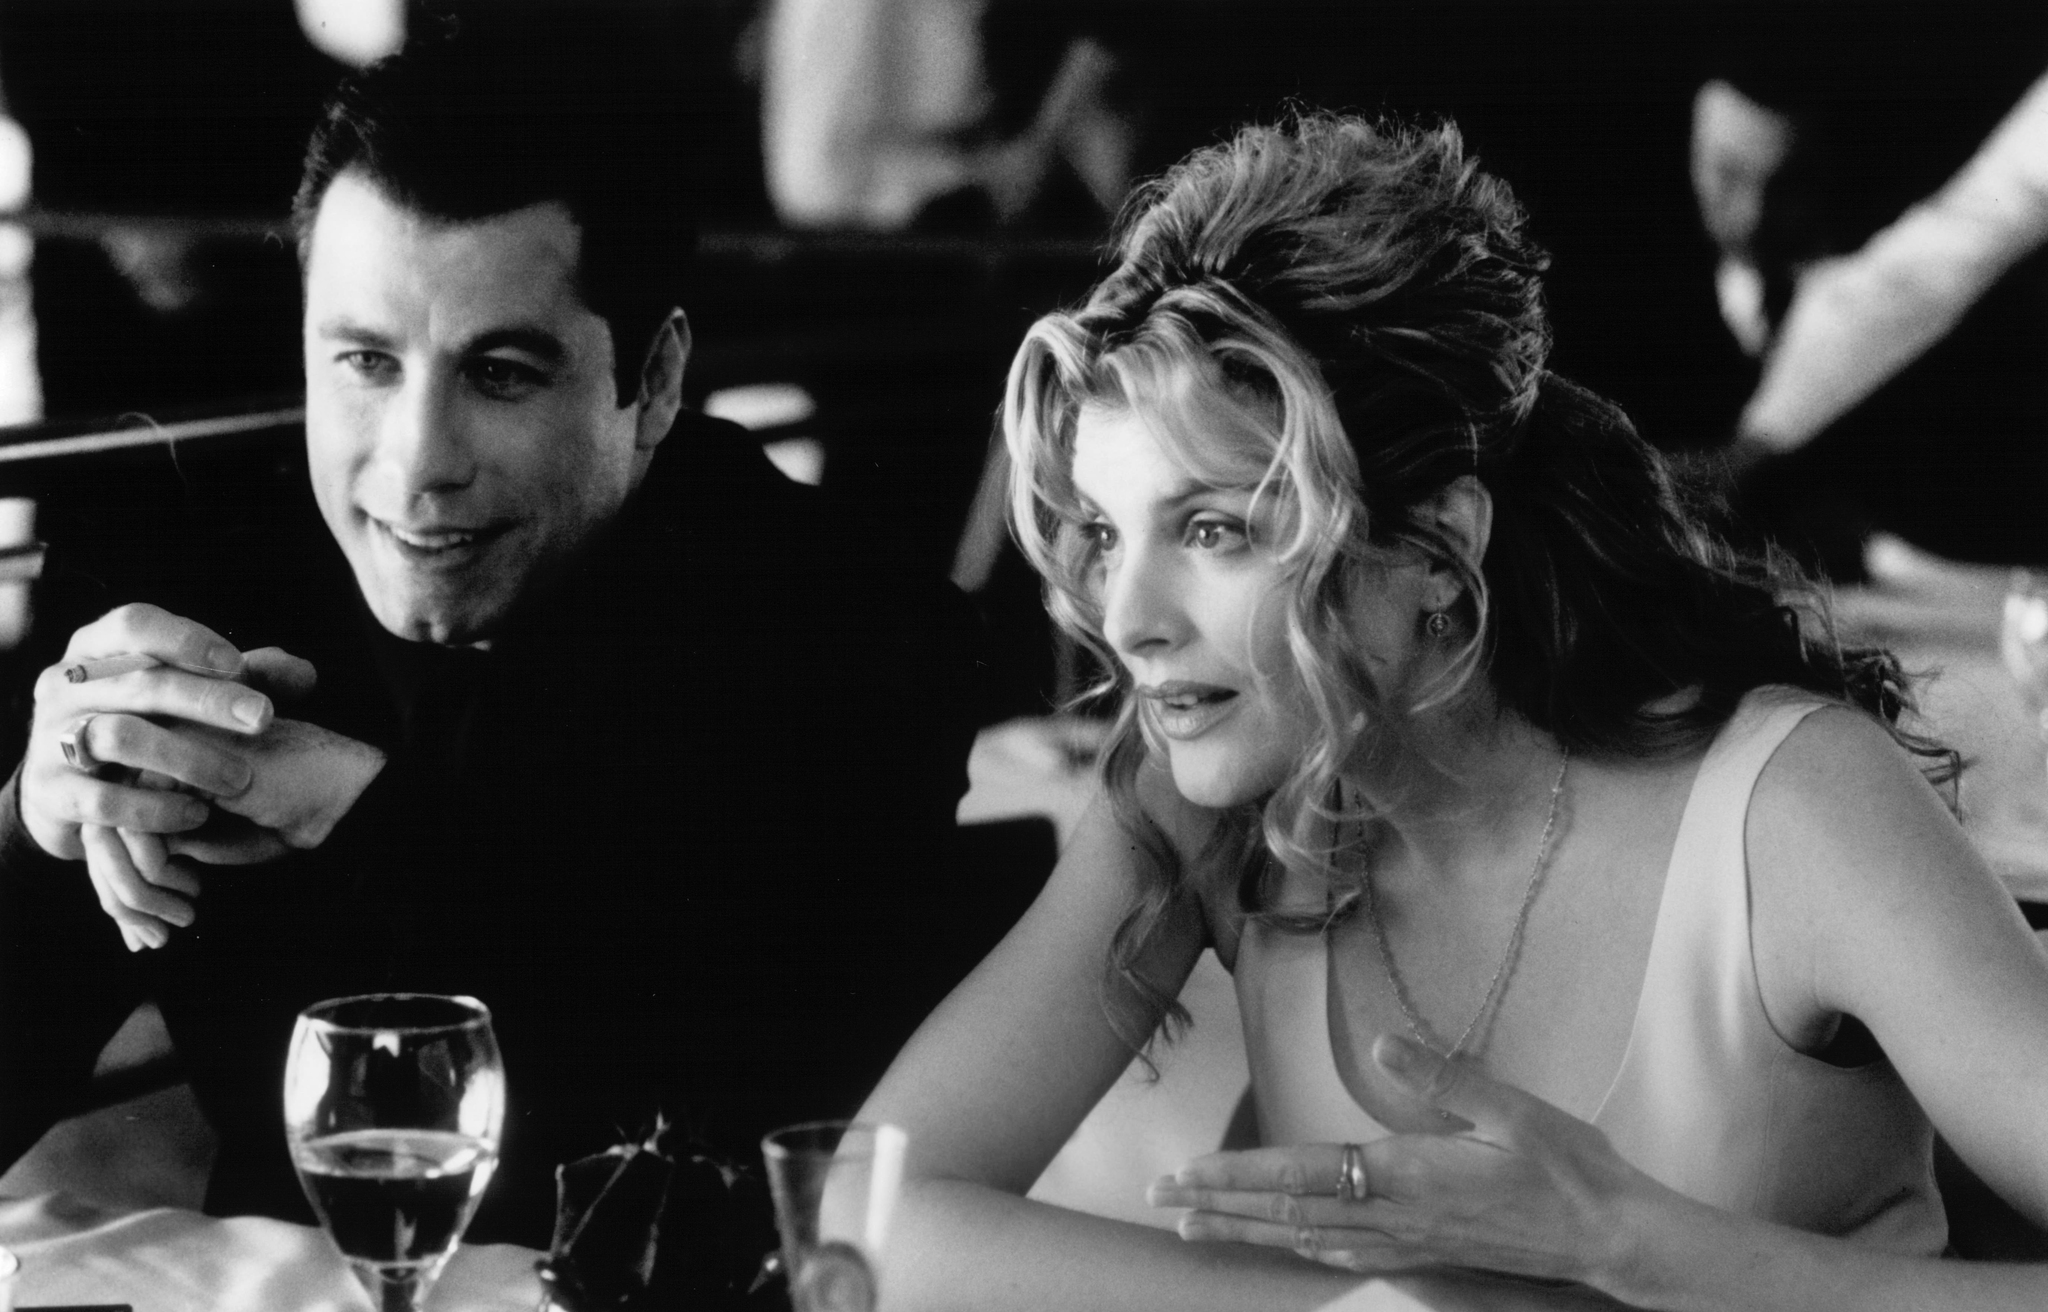 Still of John Travolta and Rene Russo in Get Shorty (1995)